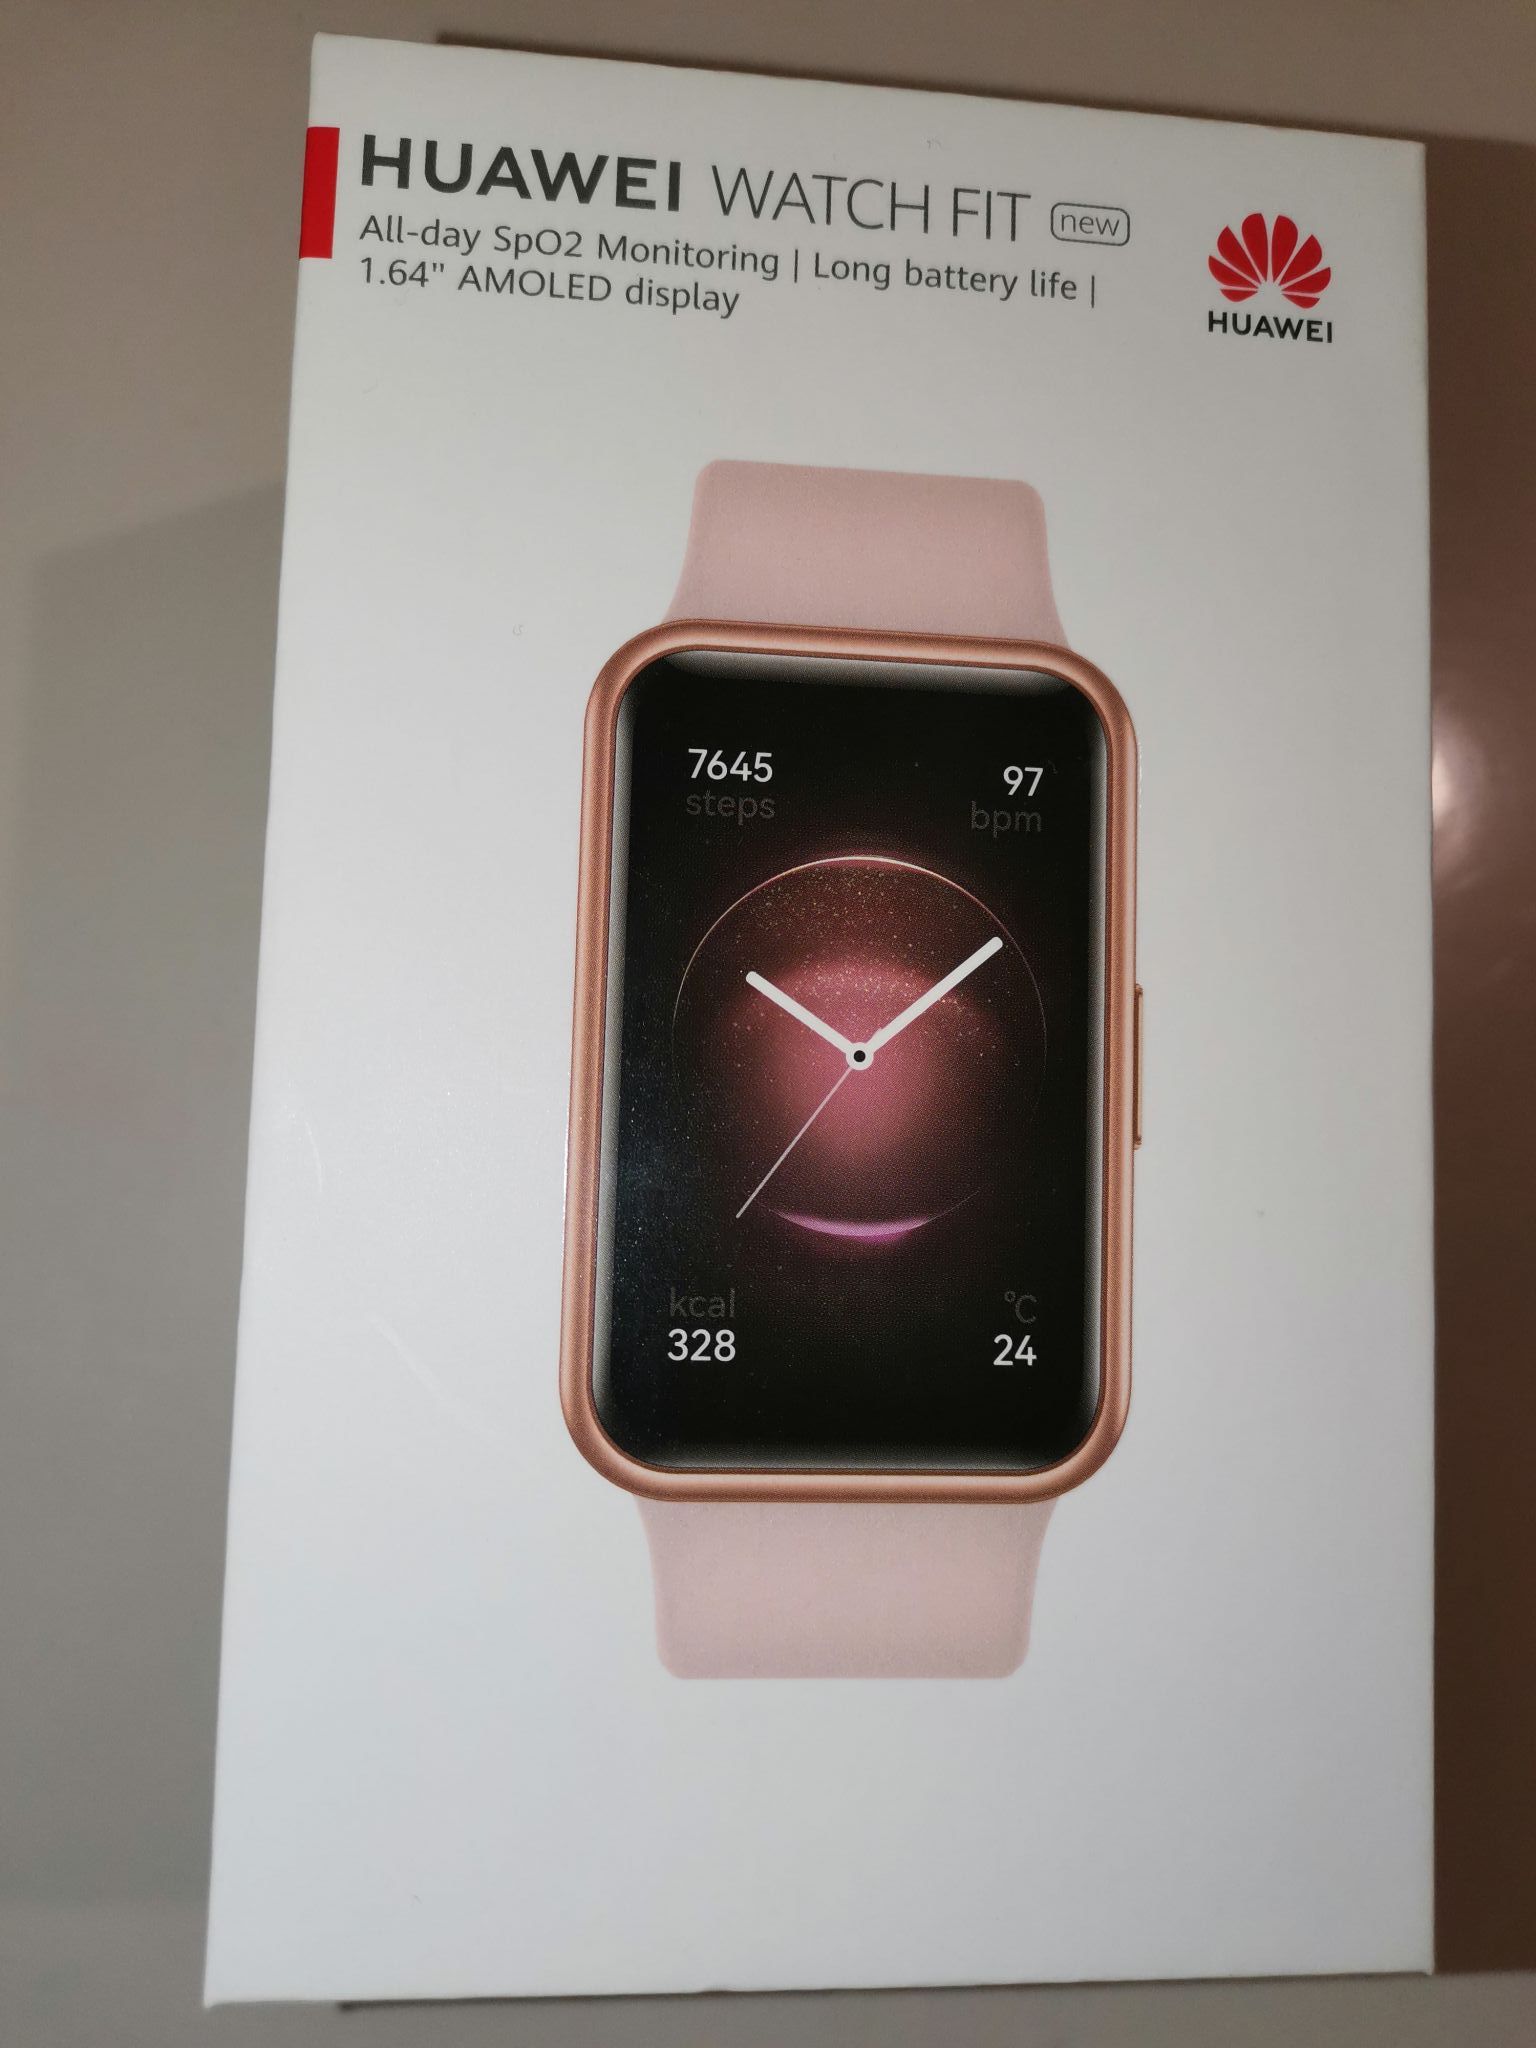 Часы huawei fit new. Смарт-часы Fit 2 Sakura Pink Silicone Strap, yda-b09s золотистый/розовый. Huawei watch Fit New. Смарт-часы Huawei watch Fit New Sakura Pink (Tia-b09). Watch Fit 2 Active Edition розовый.